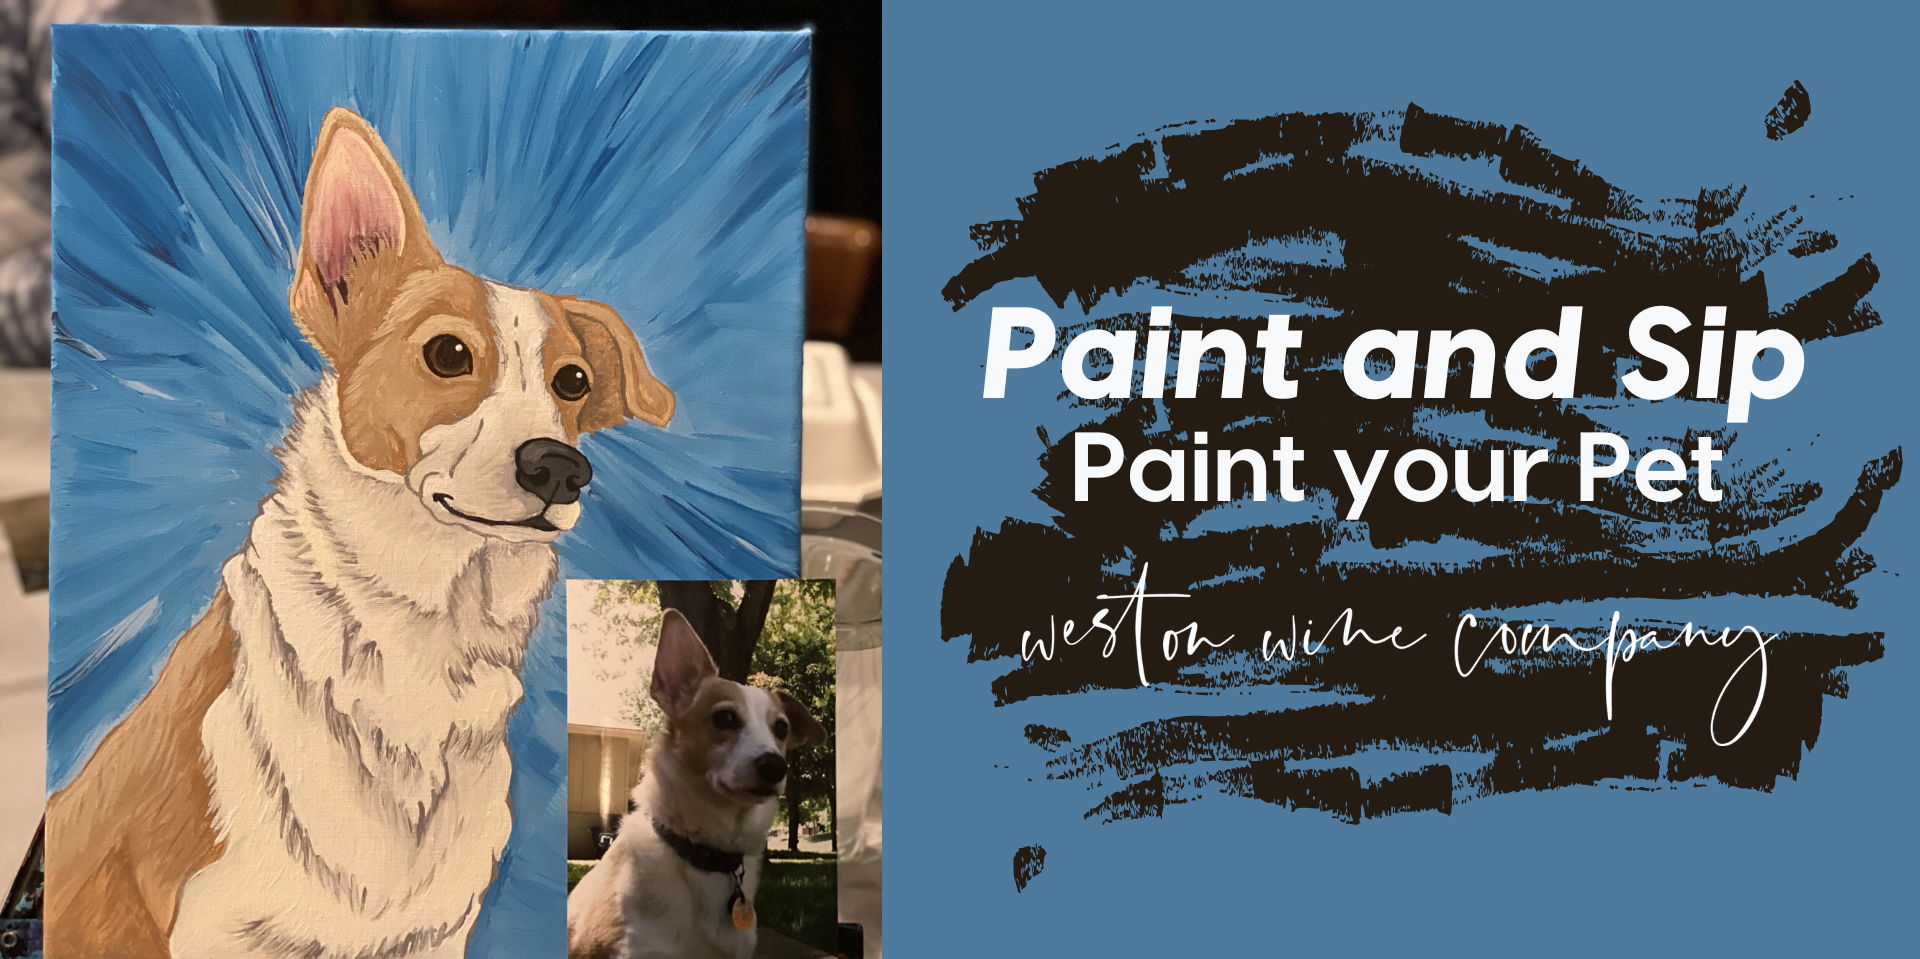 Paint and Sip - Paint Your Pet! promotional image